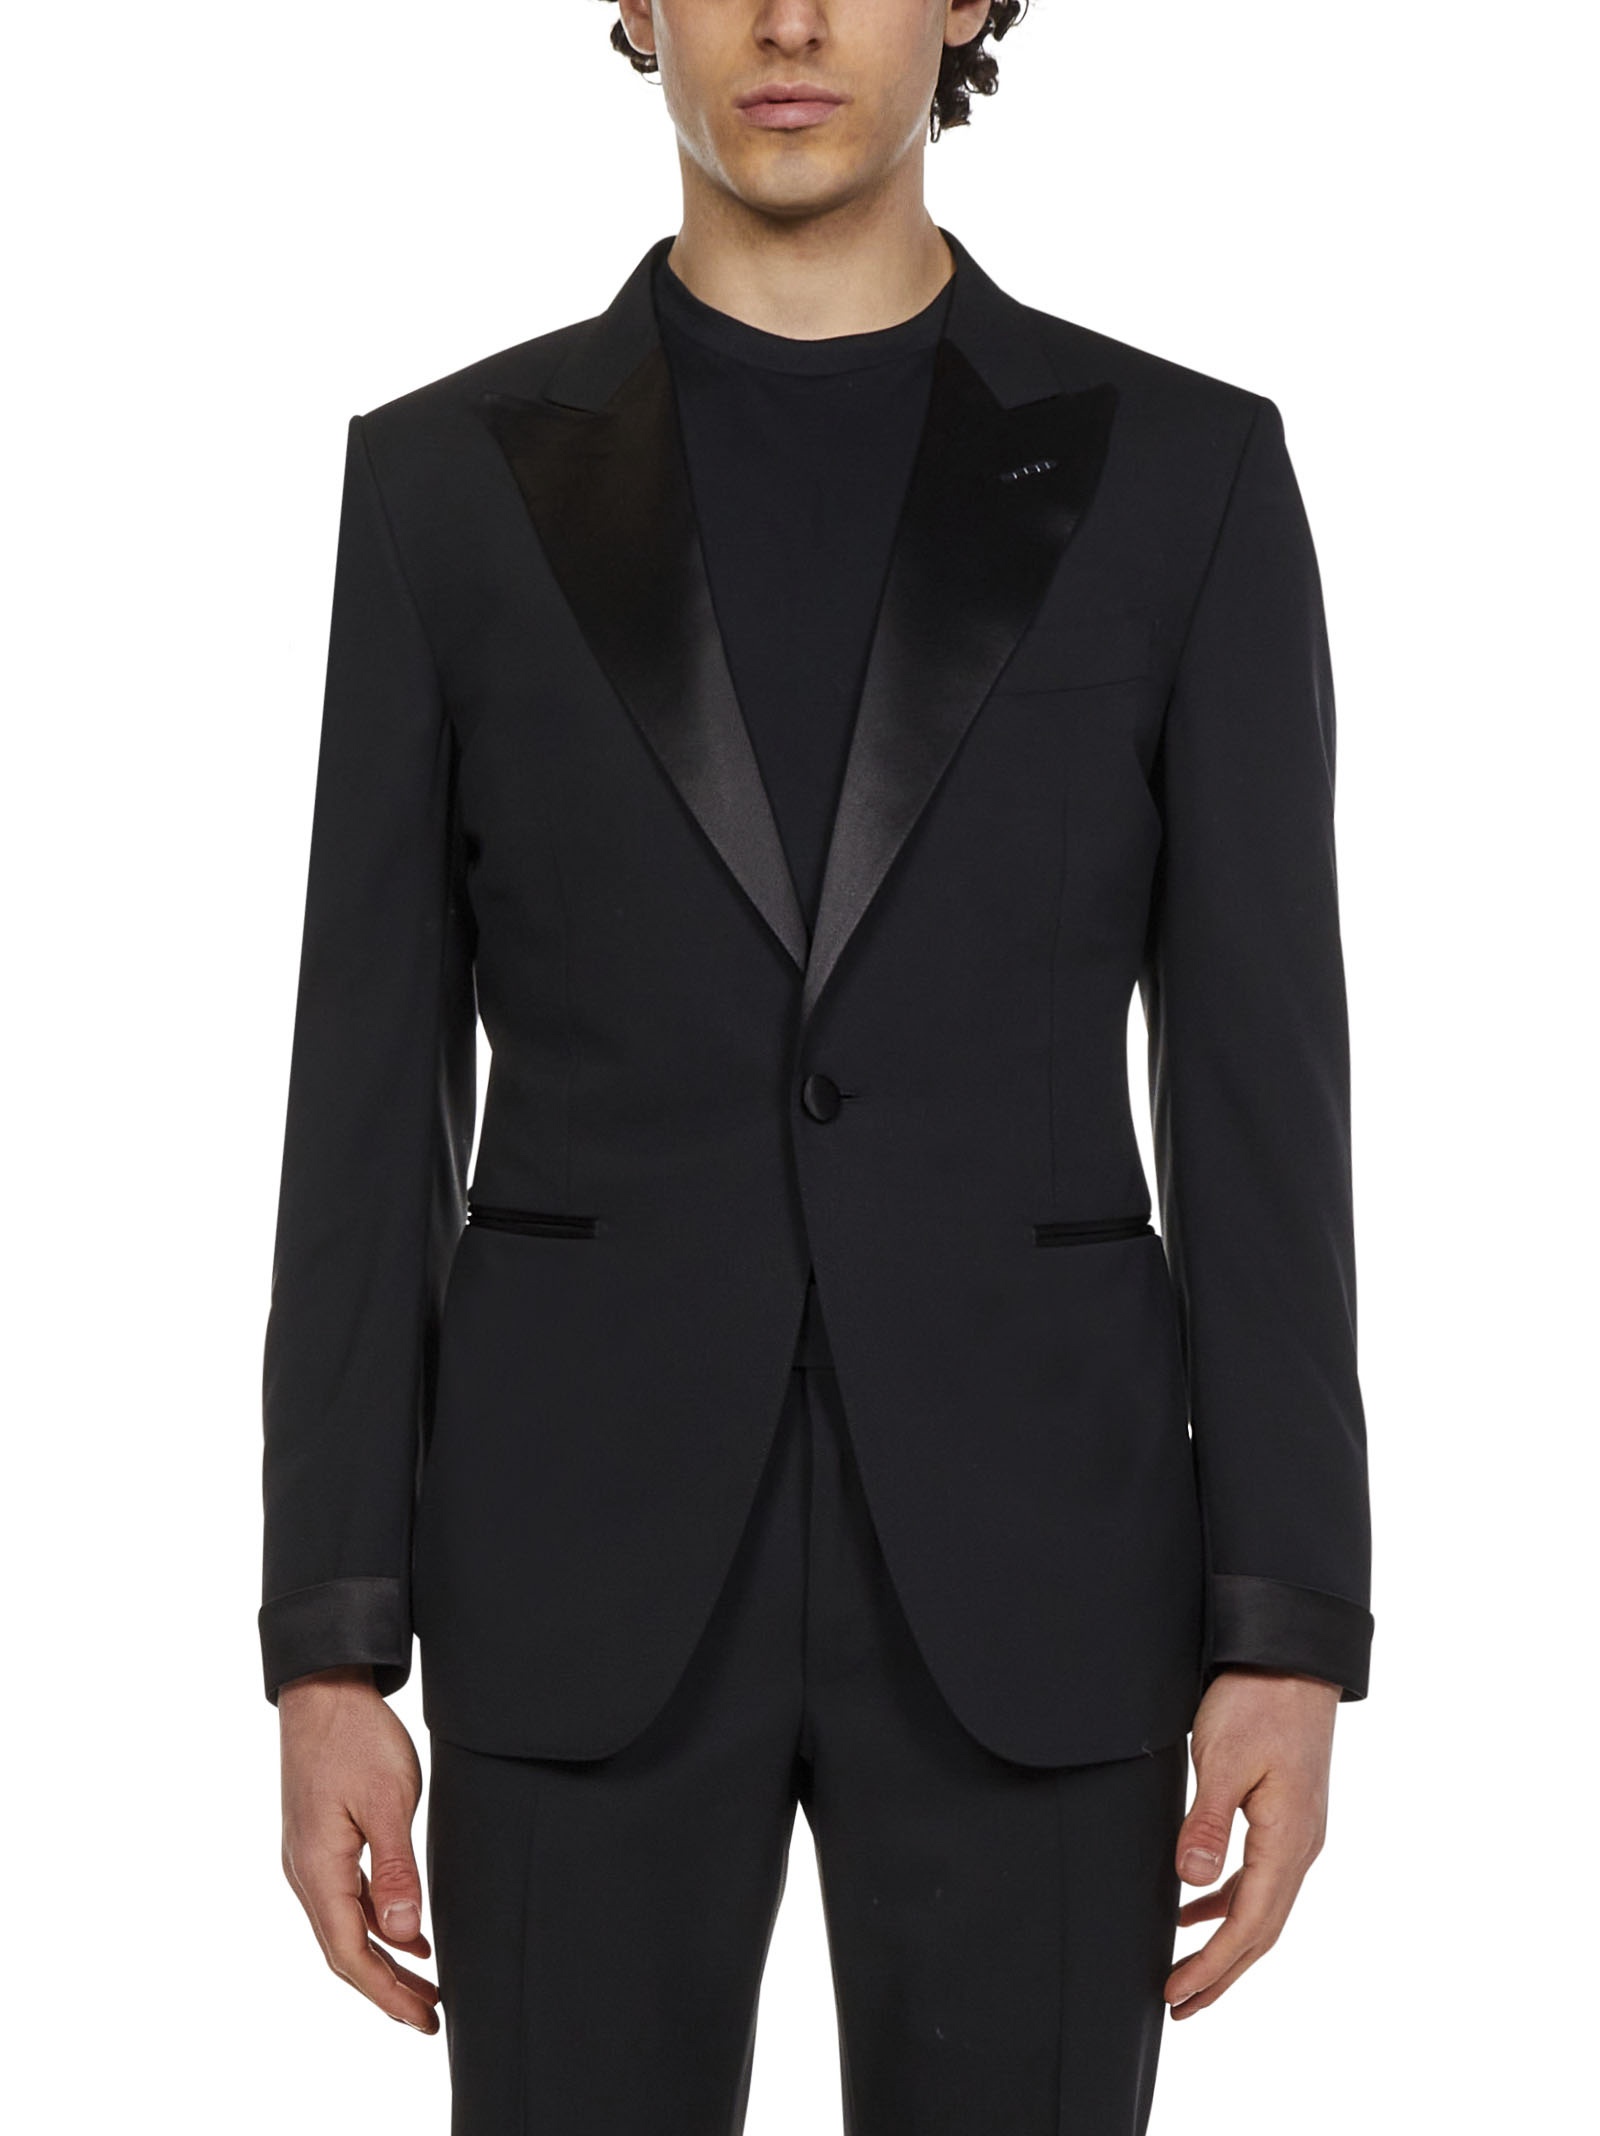 O 'Connor suit - 2